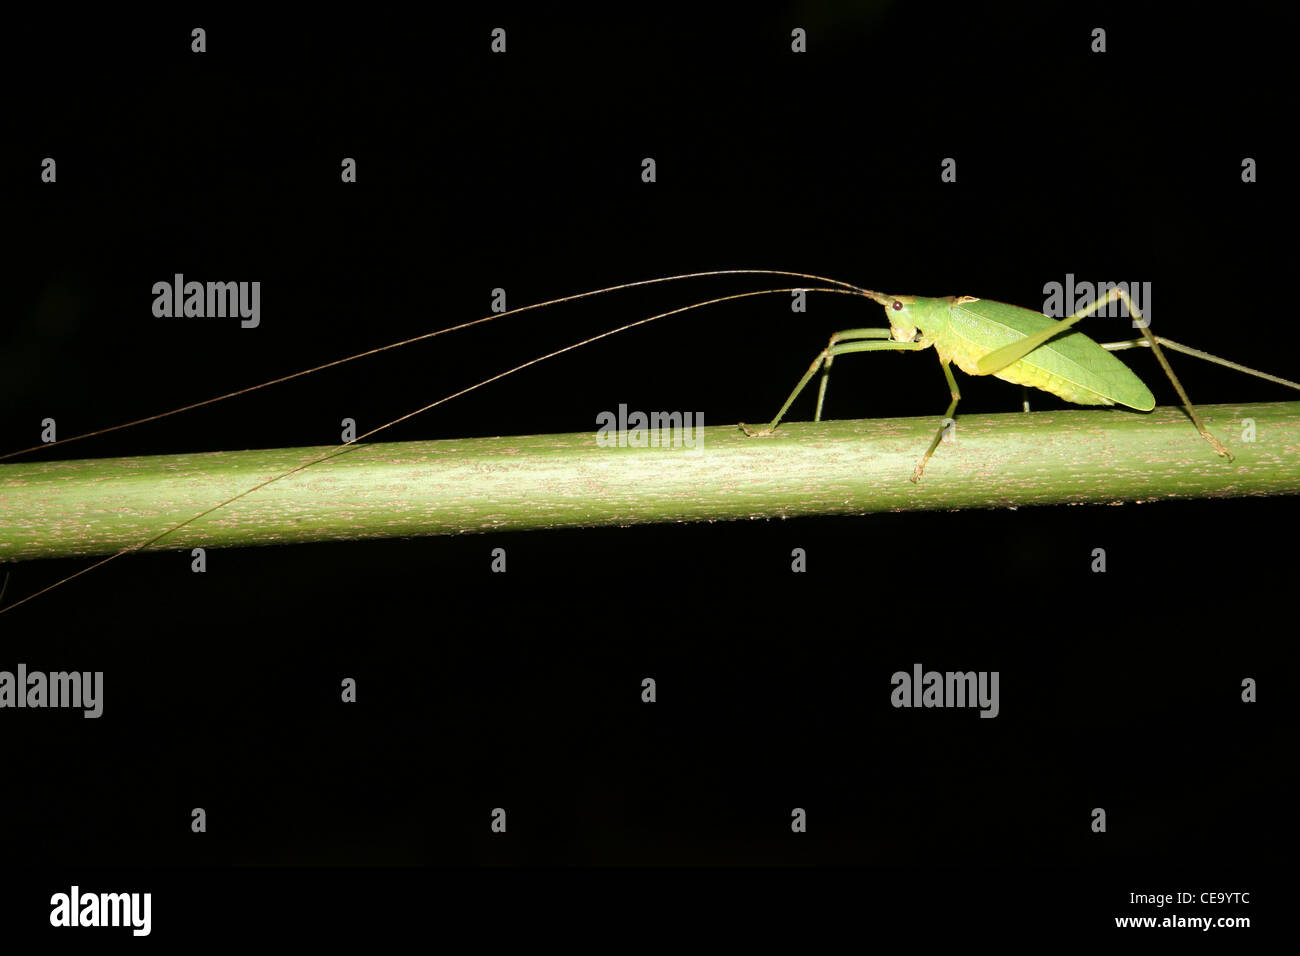 Green Cricket Taken At Night In Tortuguero National Park, Costa Rica Stock Photo